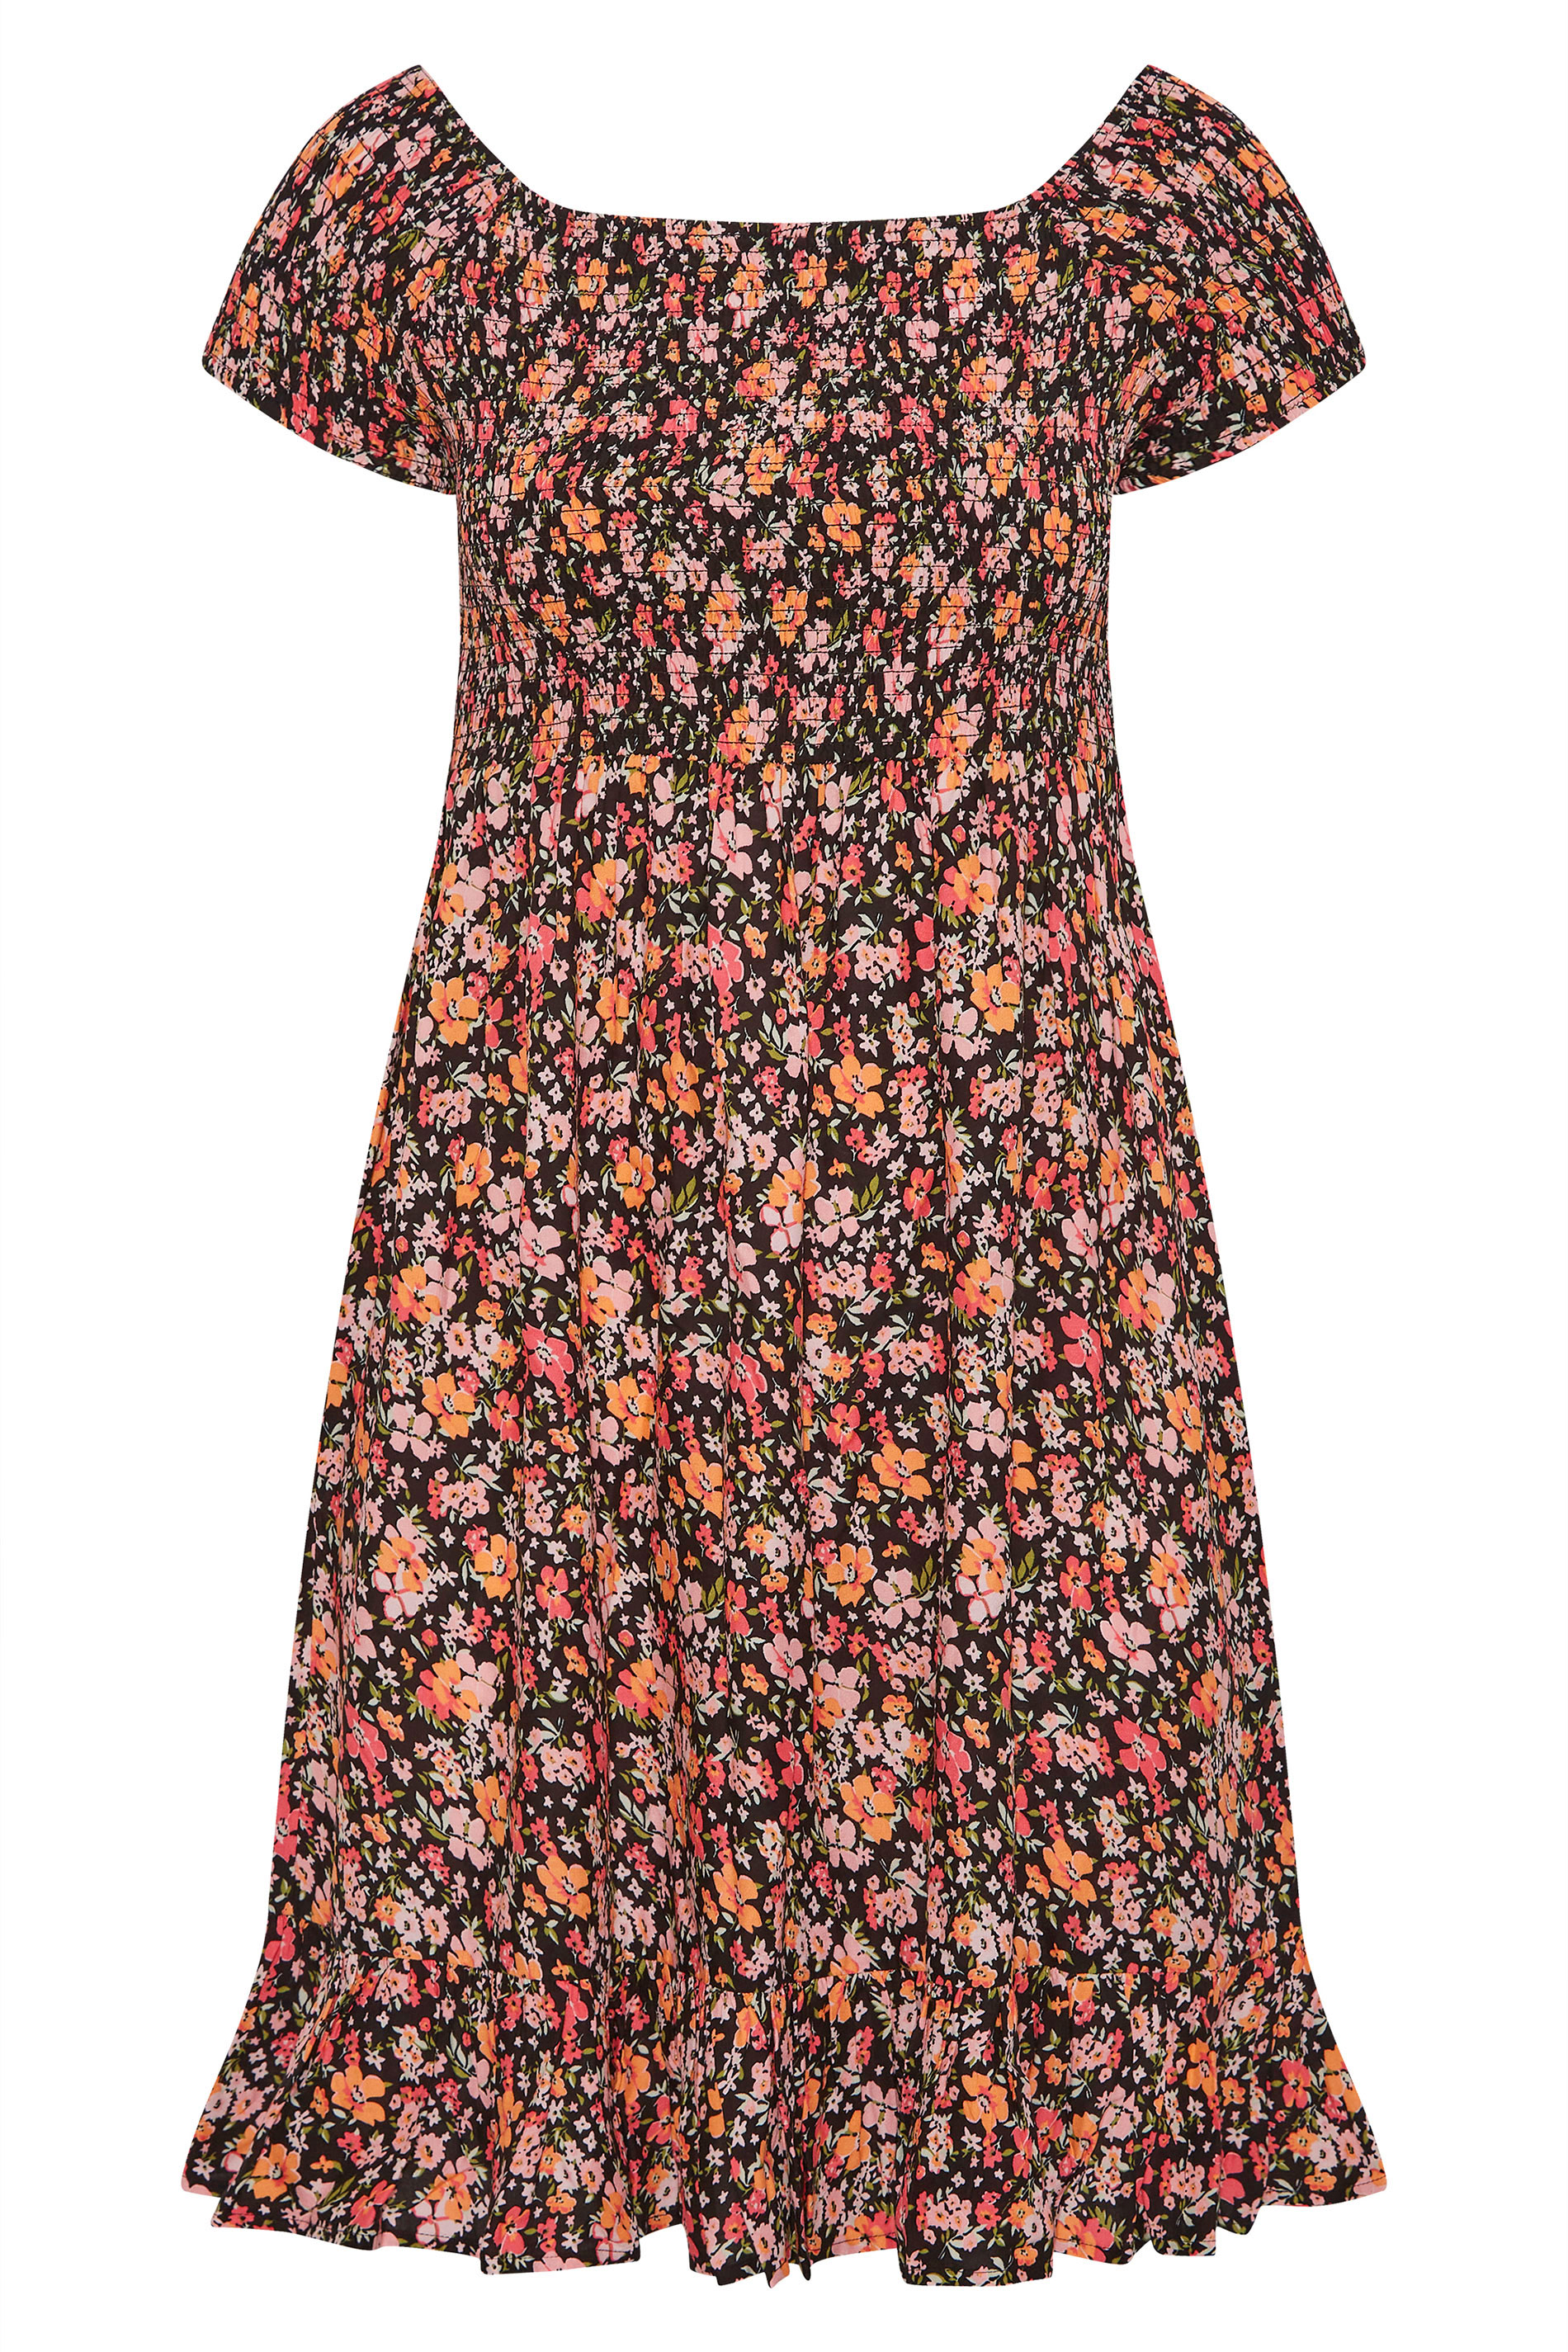 Robes Grande Taille Grande taille  Robes Mi-Longue | Robe Crayon Orange Floral Encolure Bardot - OF68364